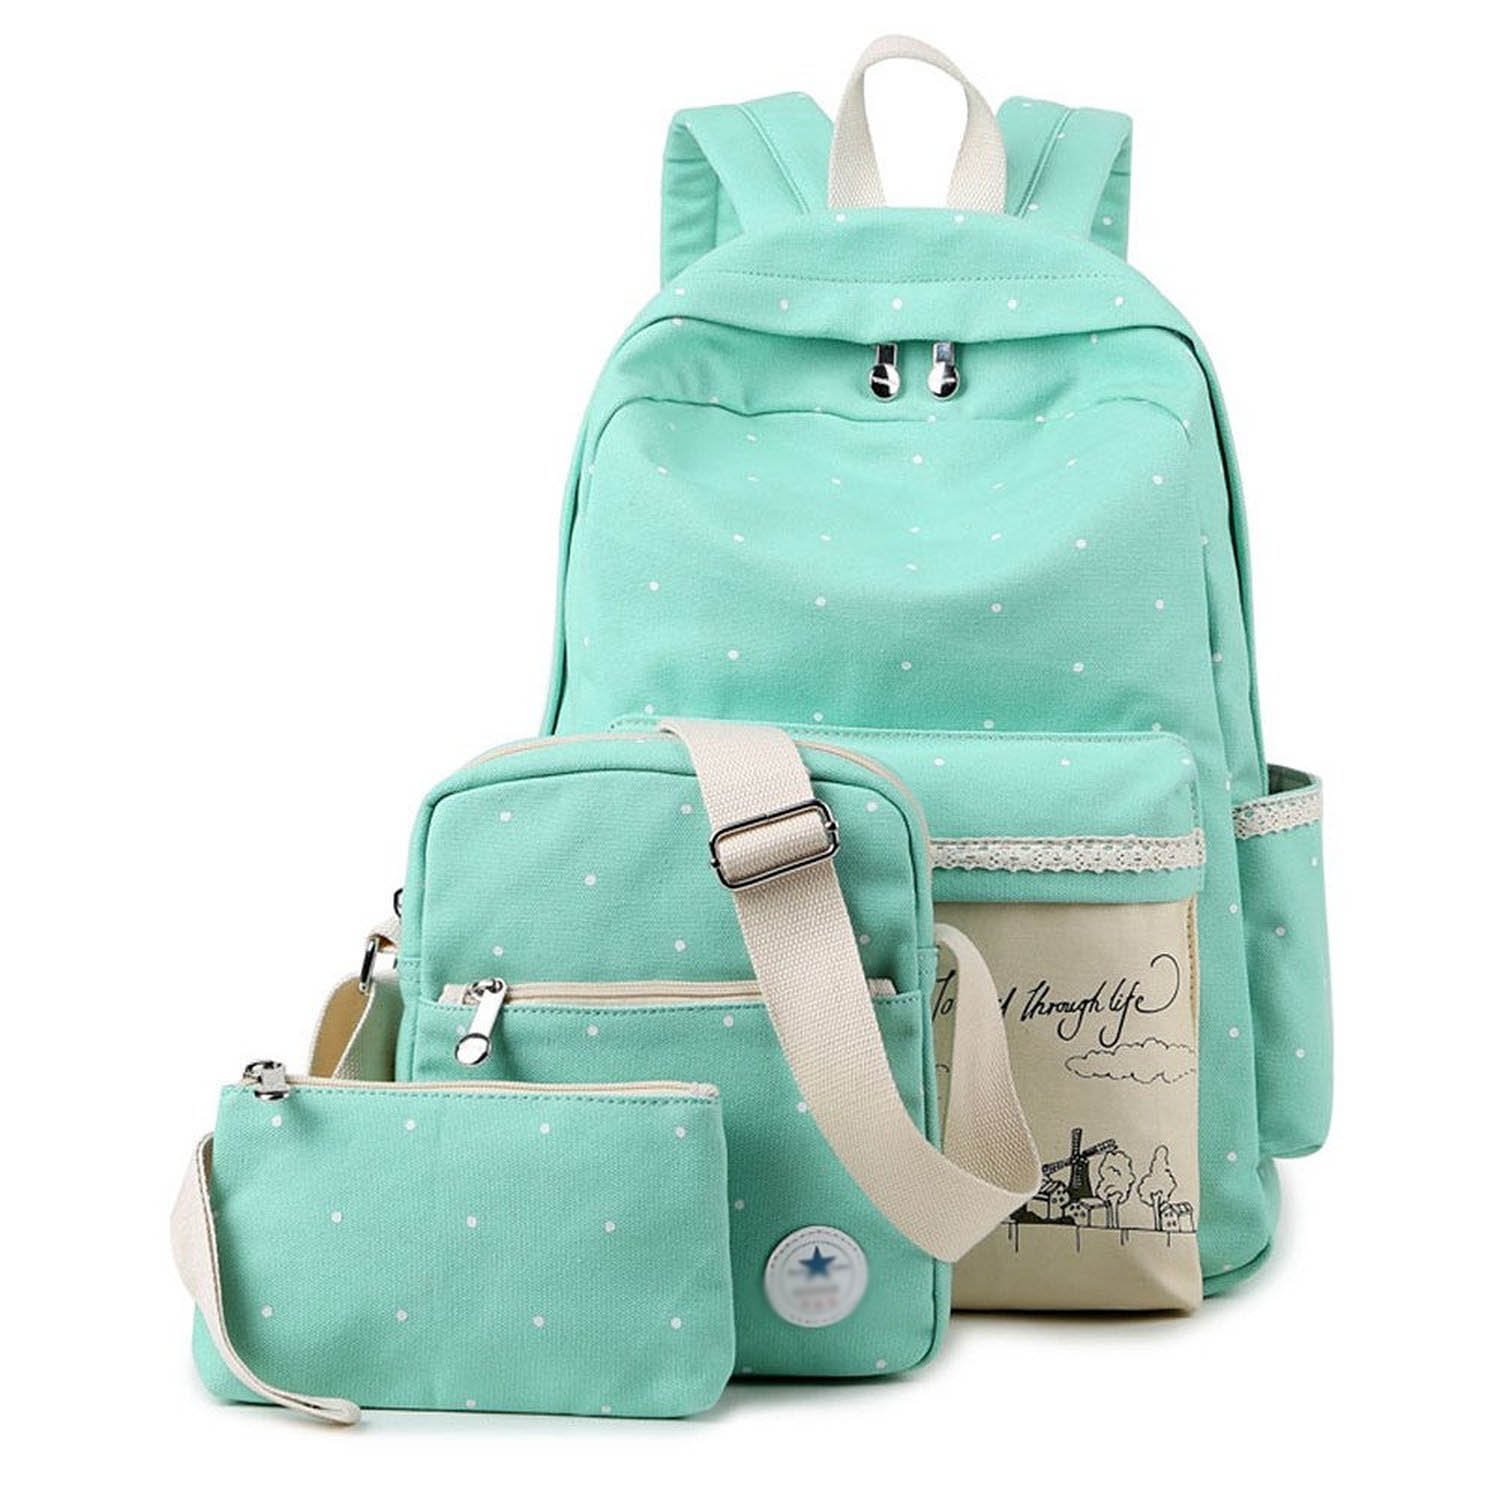 Samaz 3-in-1 Cute Korean Lace Canvas School Backpack for Teen Girls ...